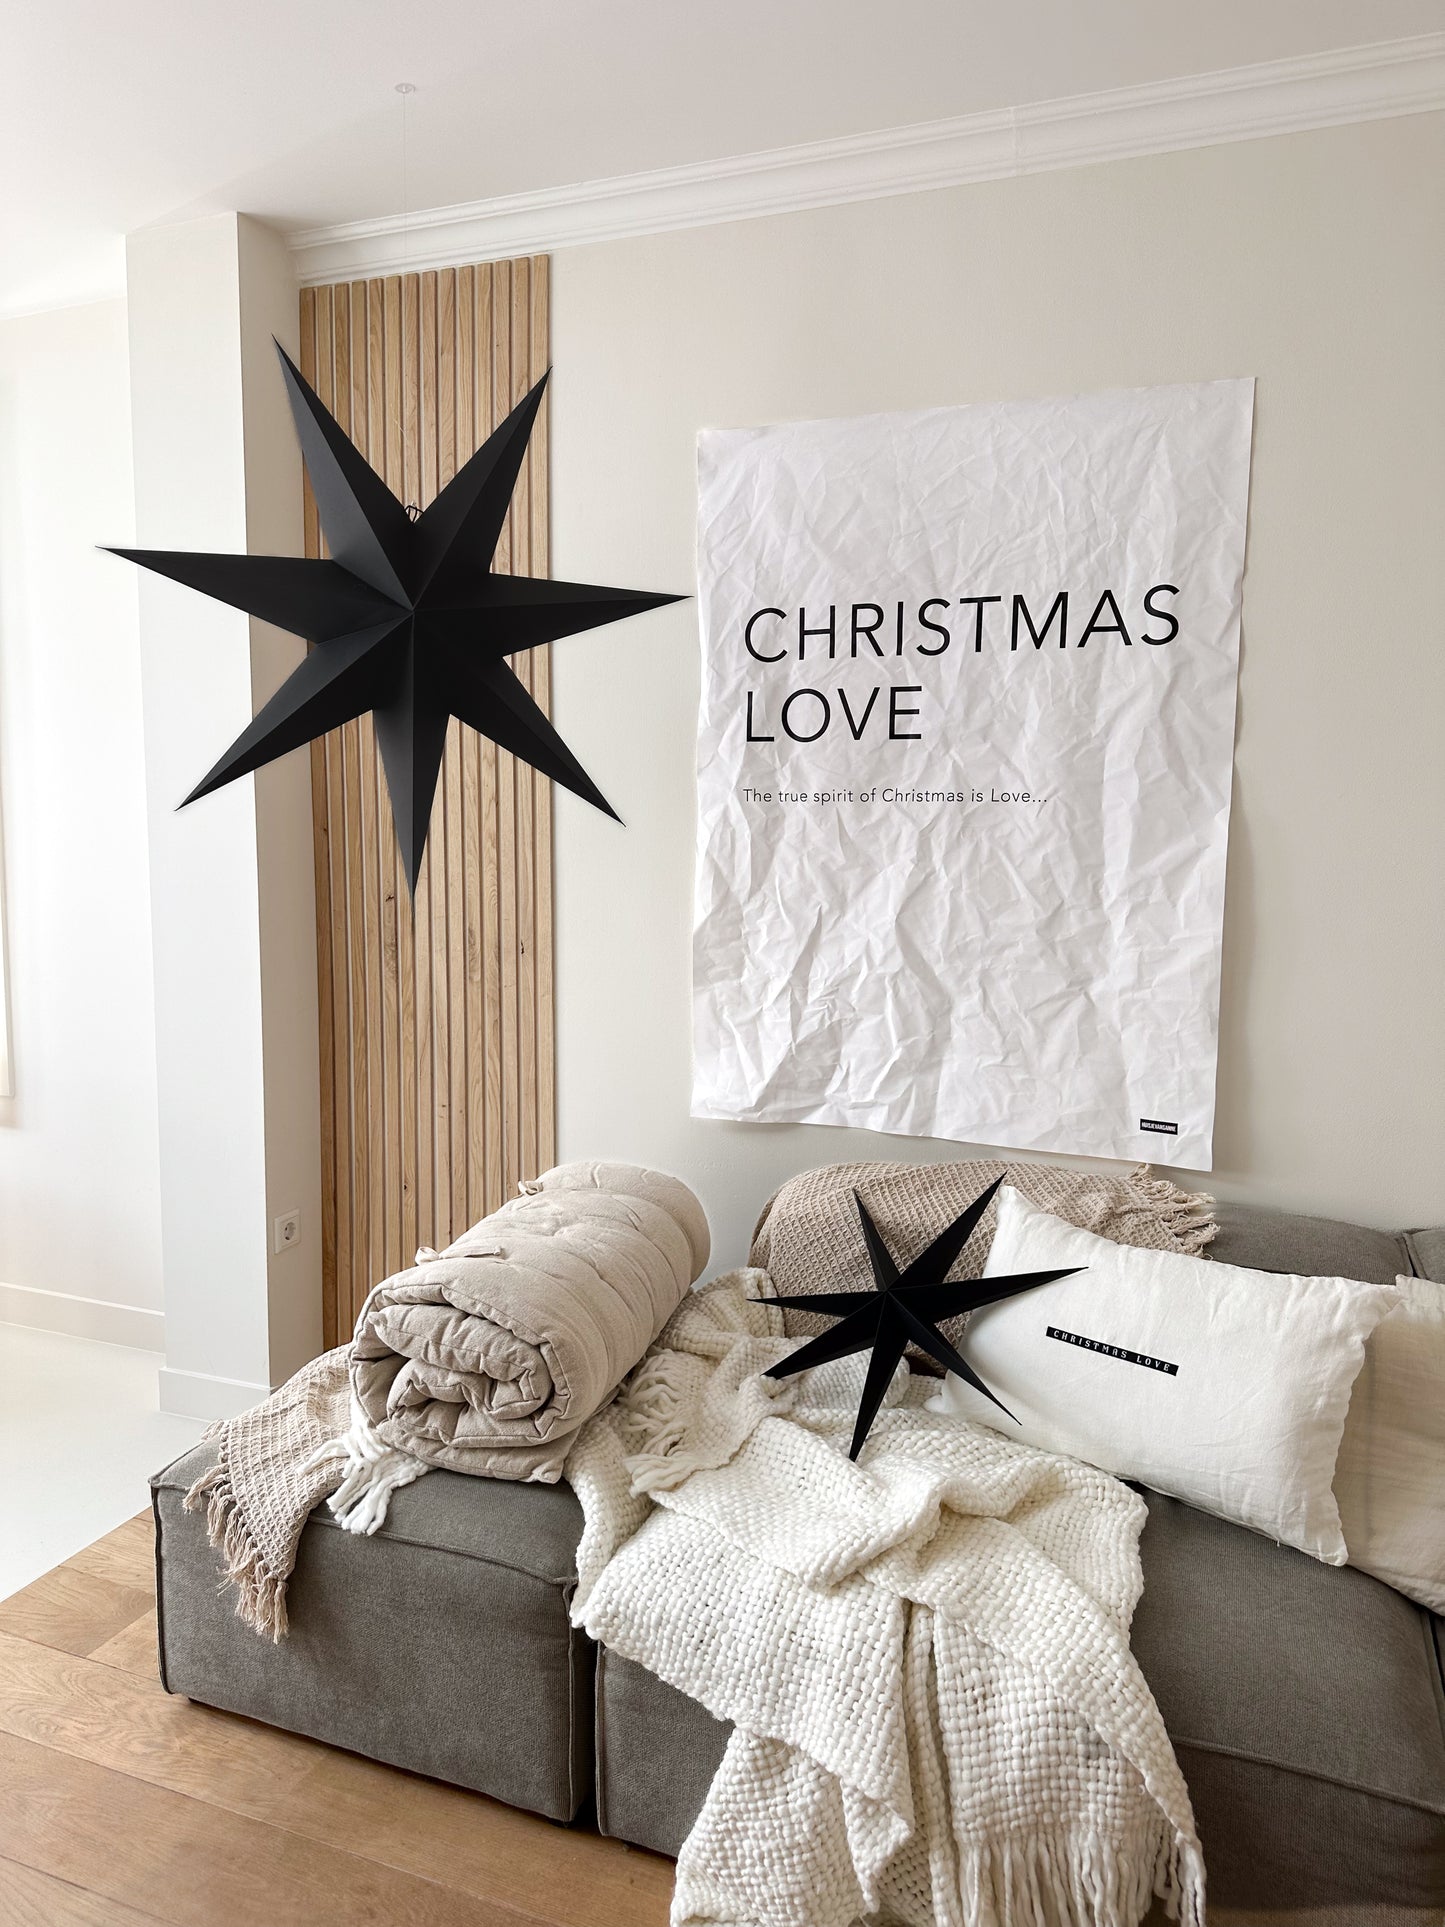 huisje van sanne beige wit kerst kussens met zwart wit label christmas love